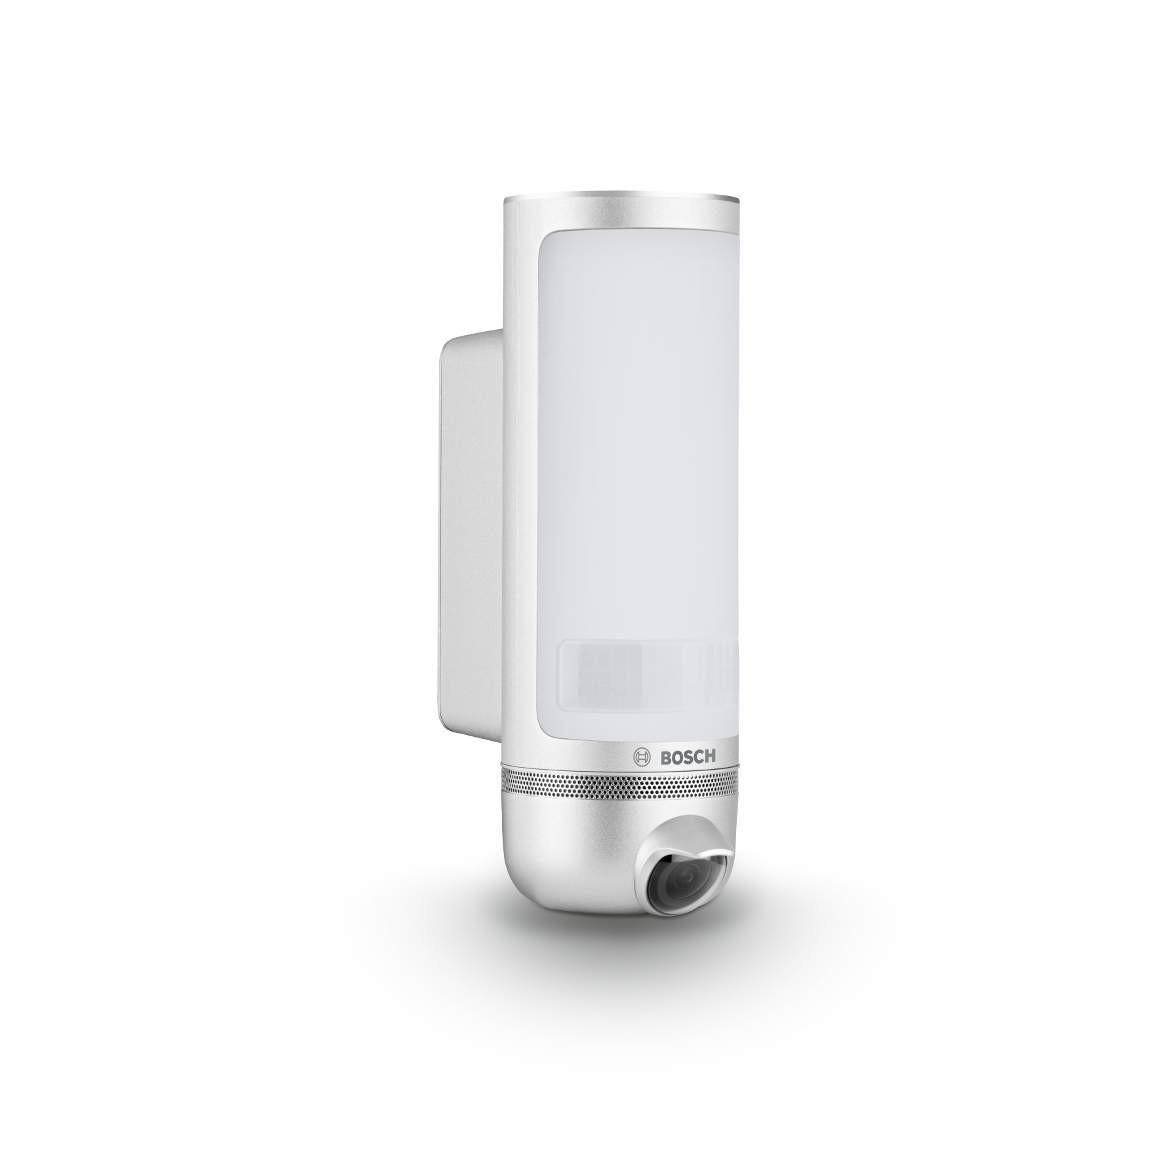 Bosch Smart Home - Starter Set Zutrittskontrolle_Smart Home Eyes schraeg